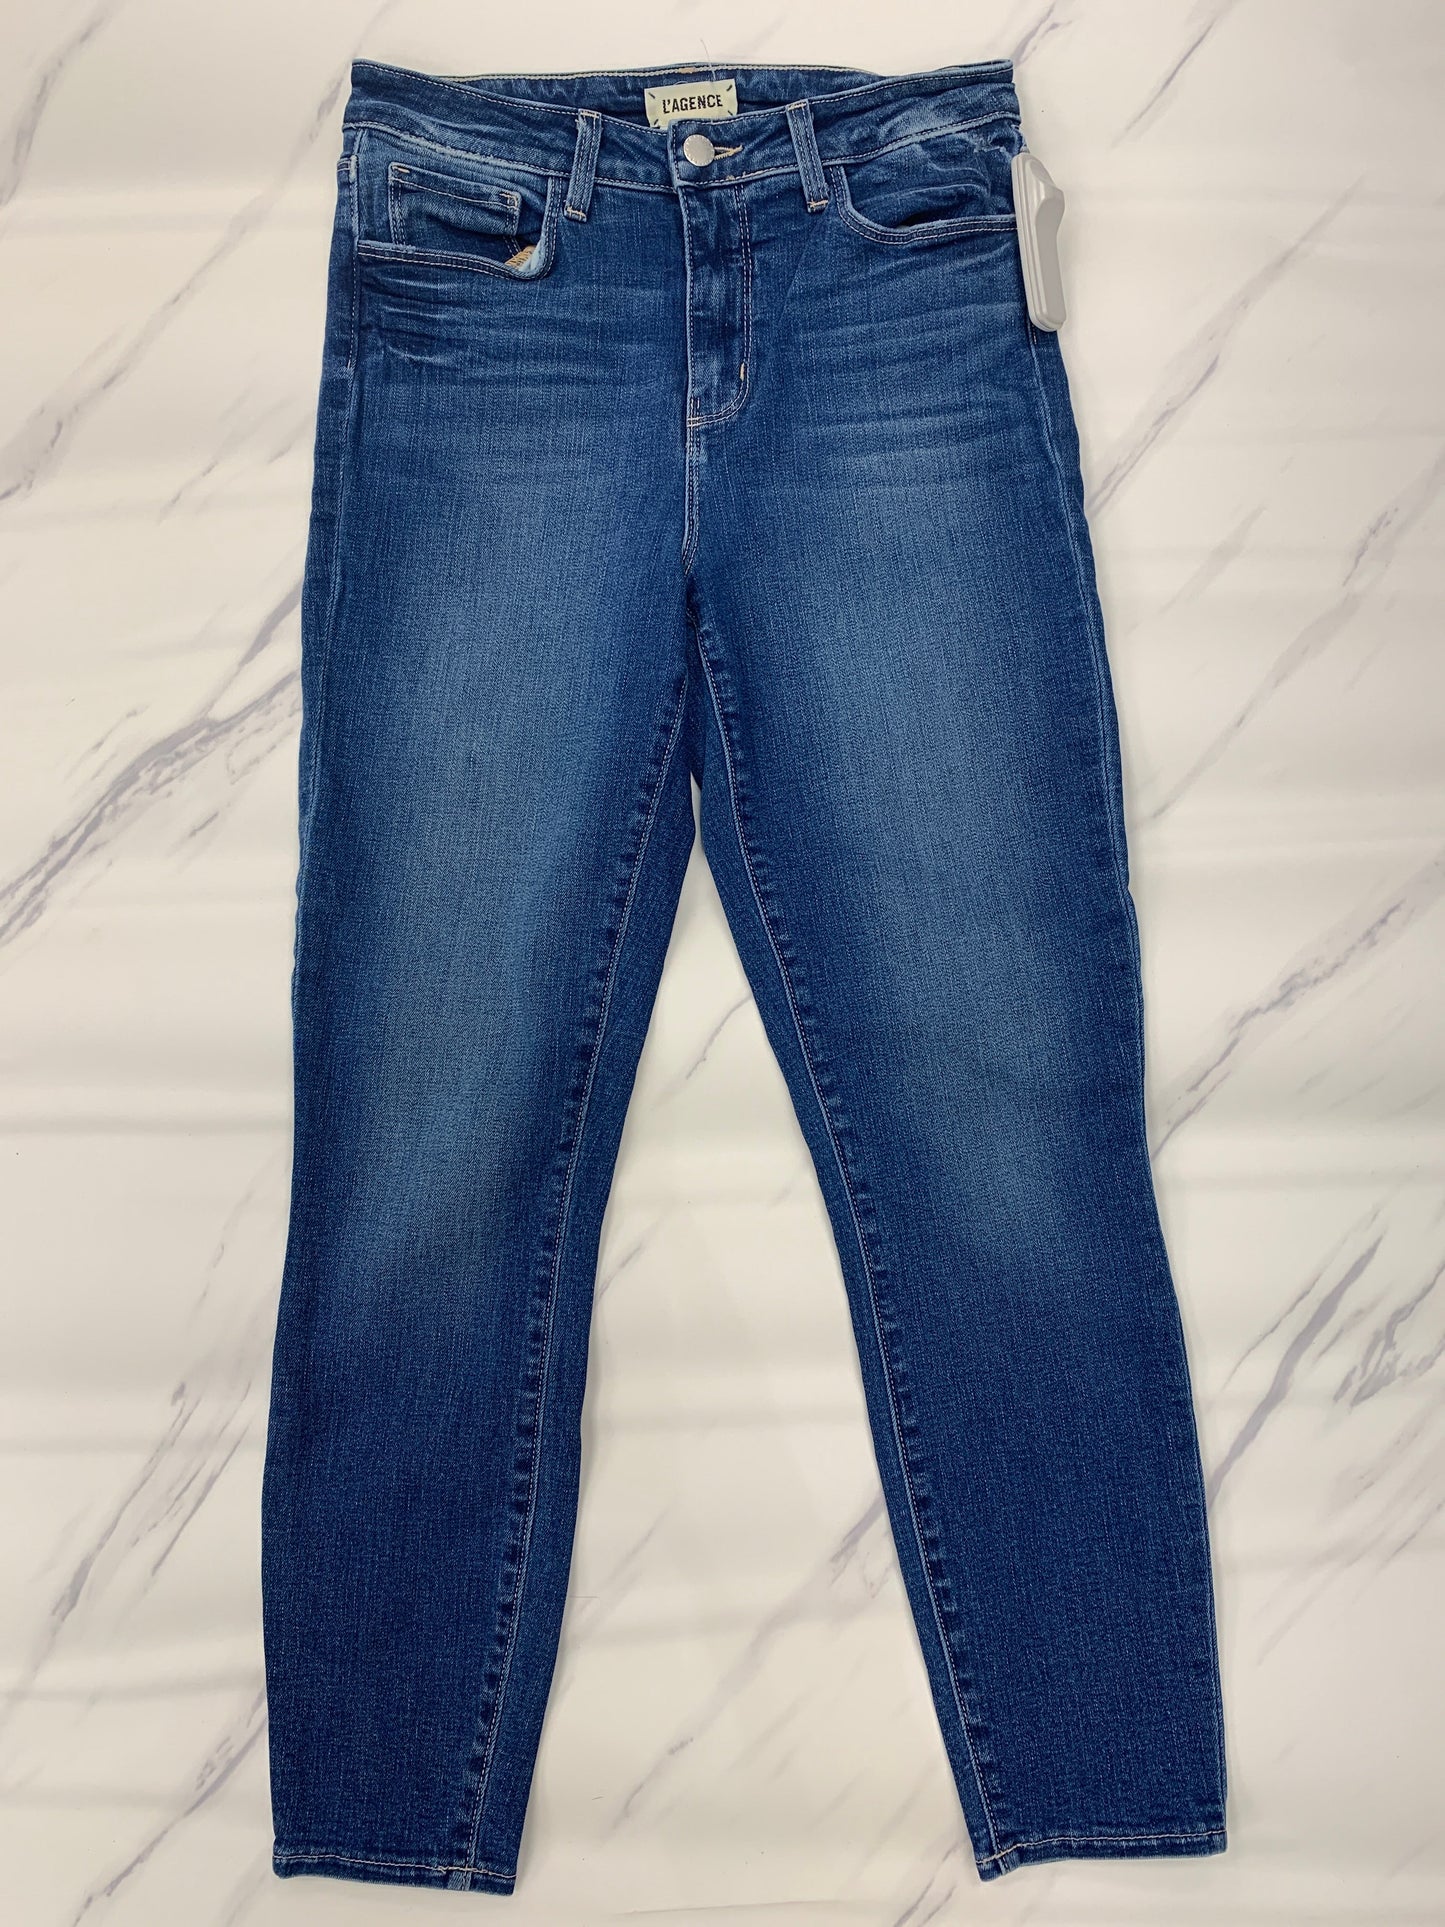 Jeans Designer By L Agence  Size: 4